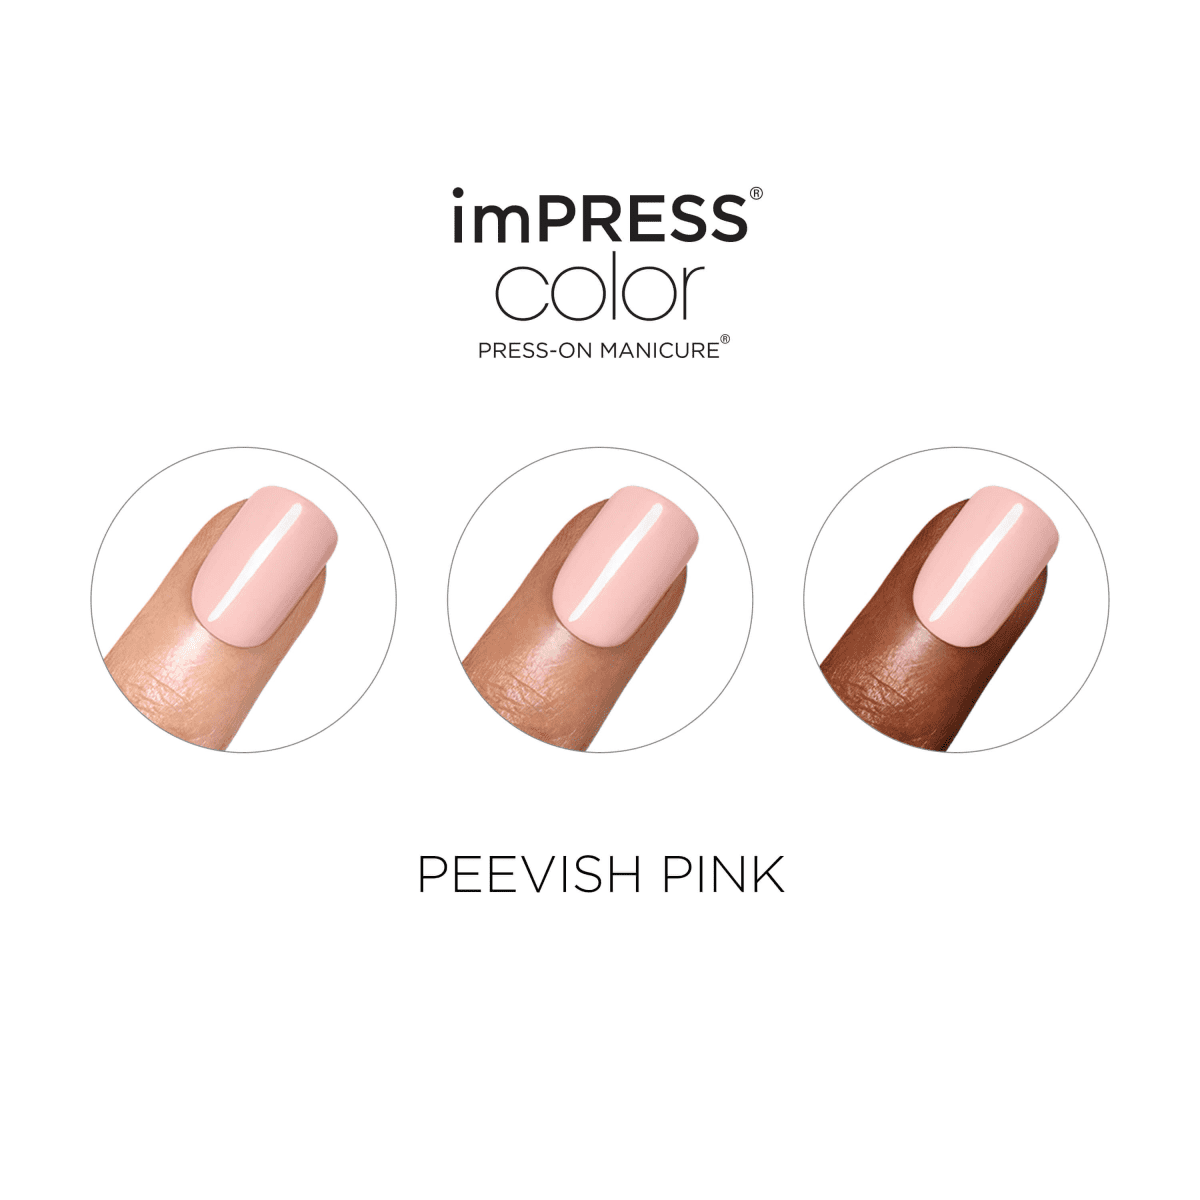 imPRESS Color Press-On Manicure -  Peevish Pink